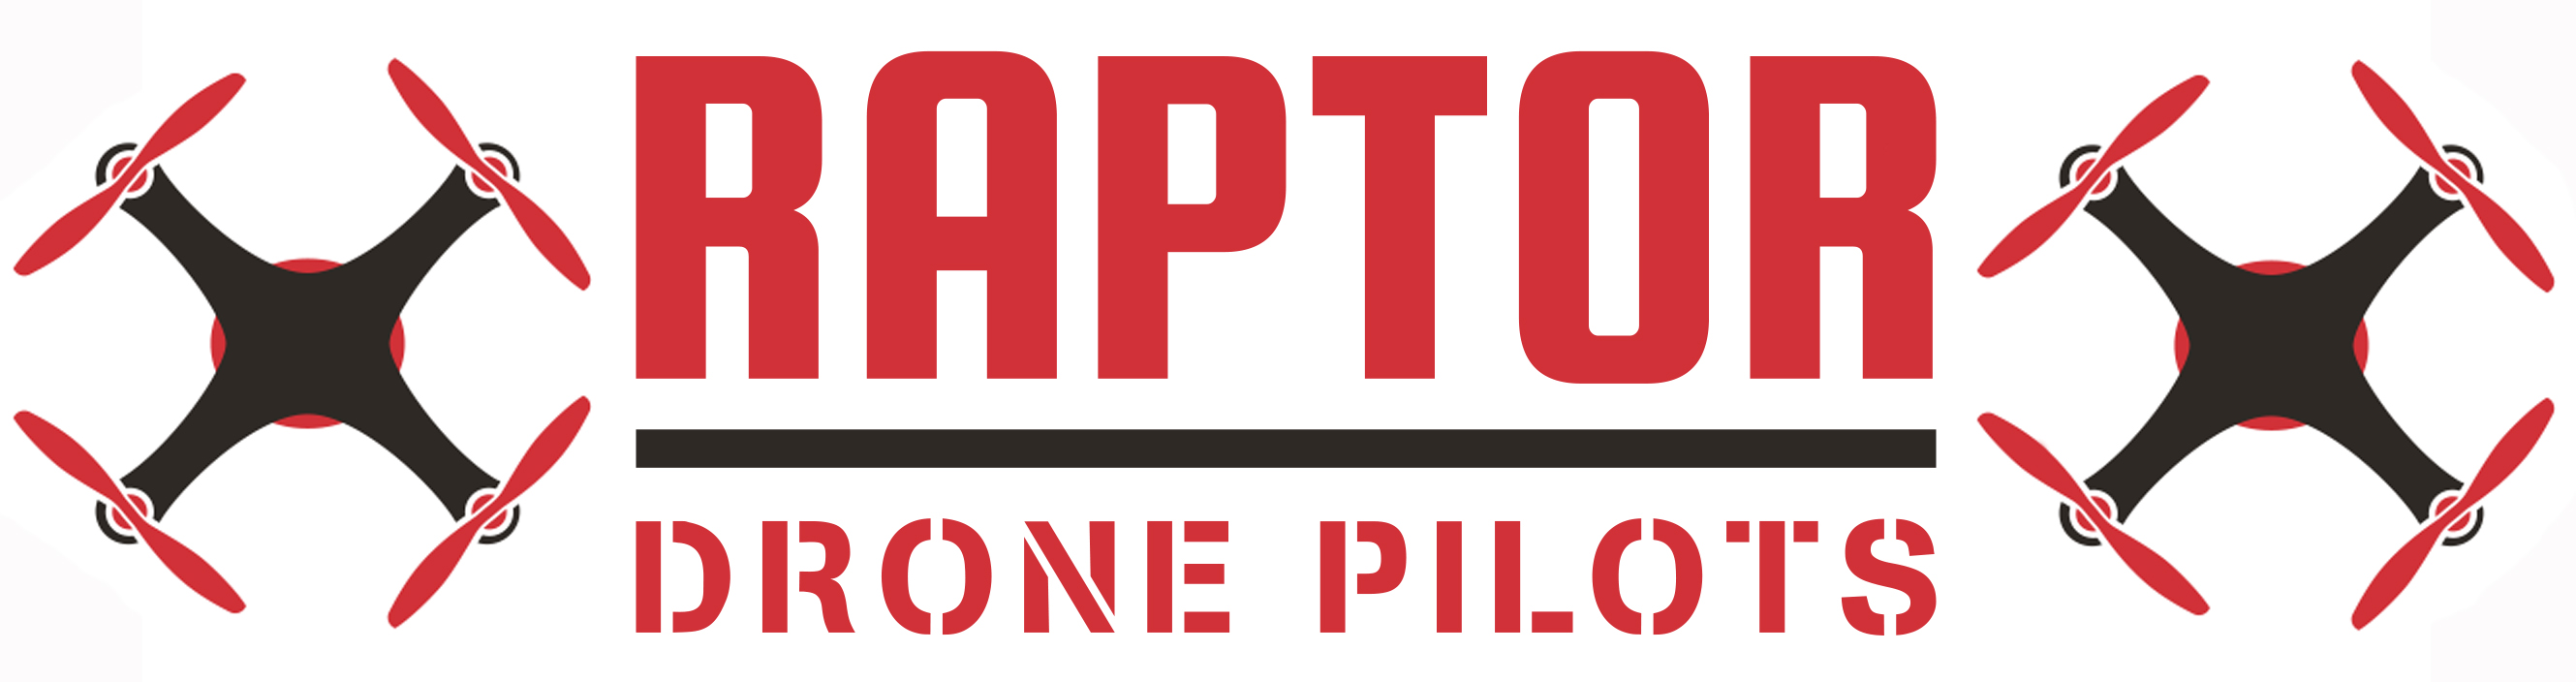 Raptor Drone Pilots Ltd